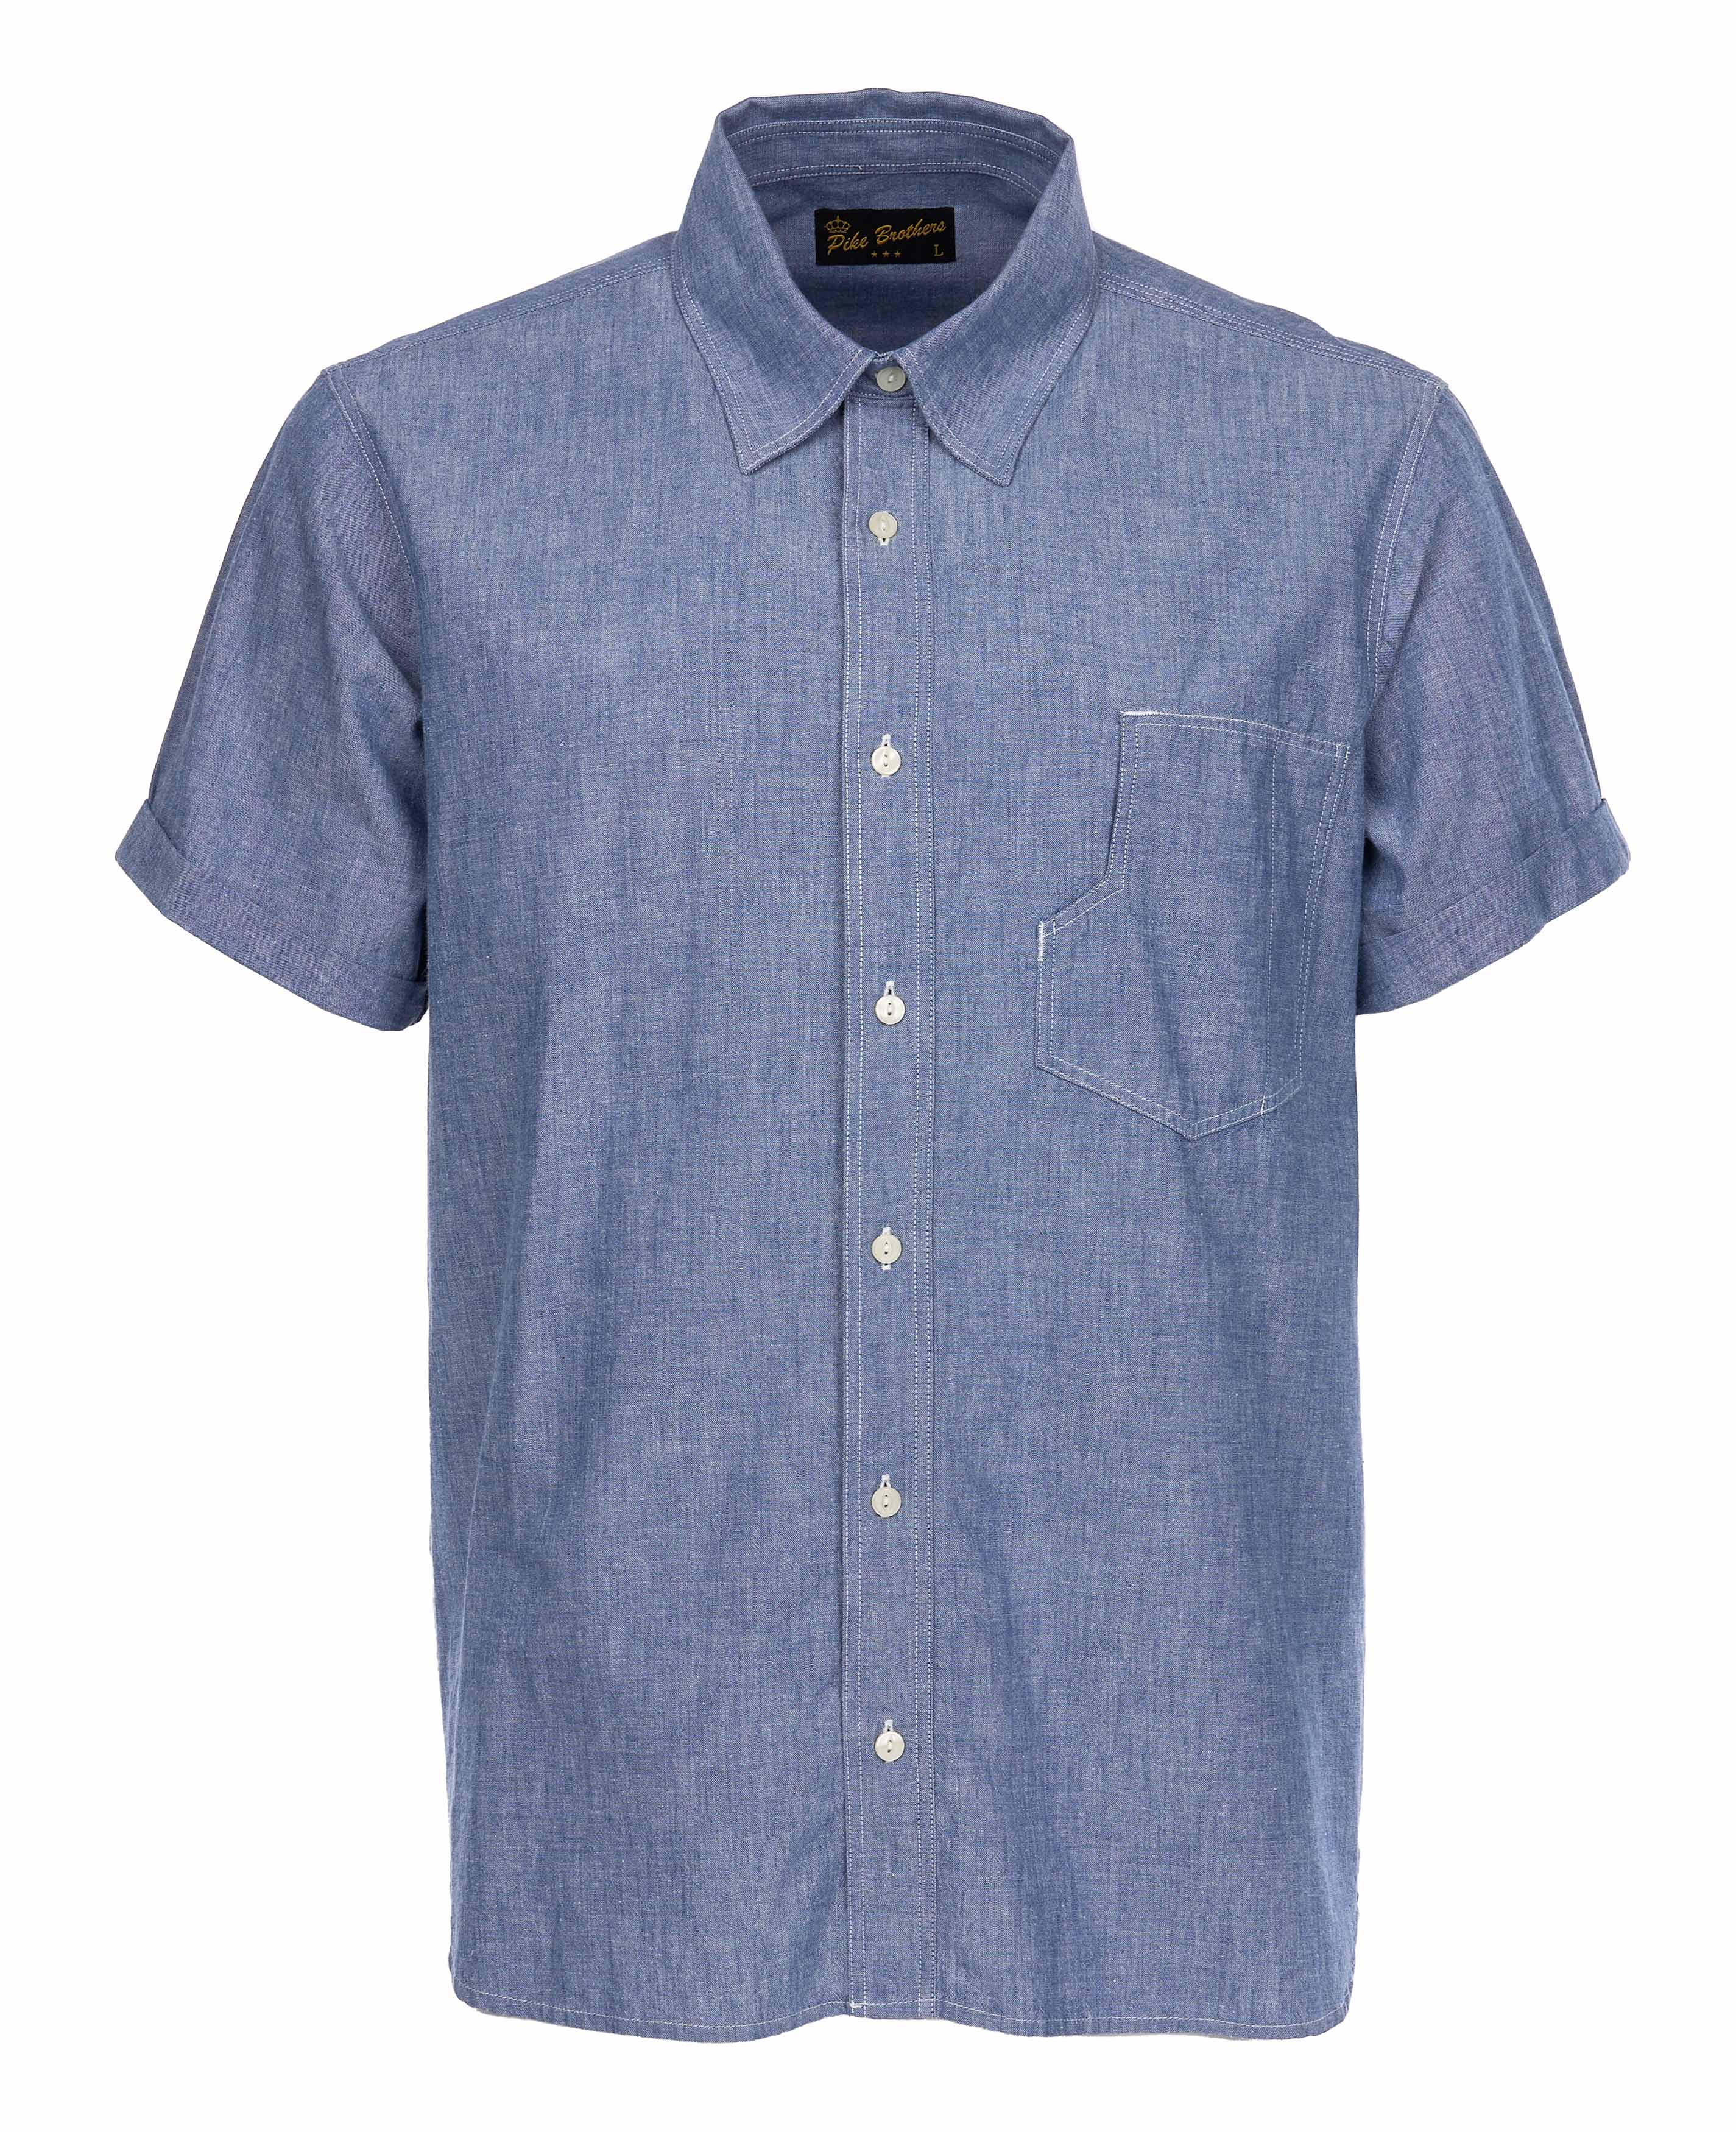 1937 Roamer Shirt Short sleeve blue chambray